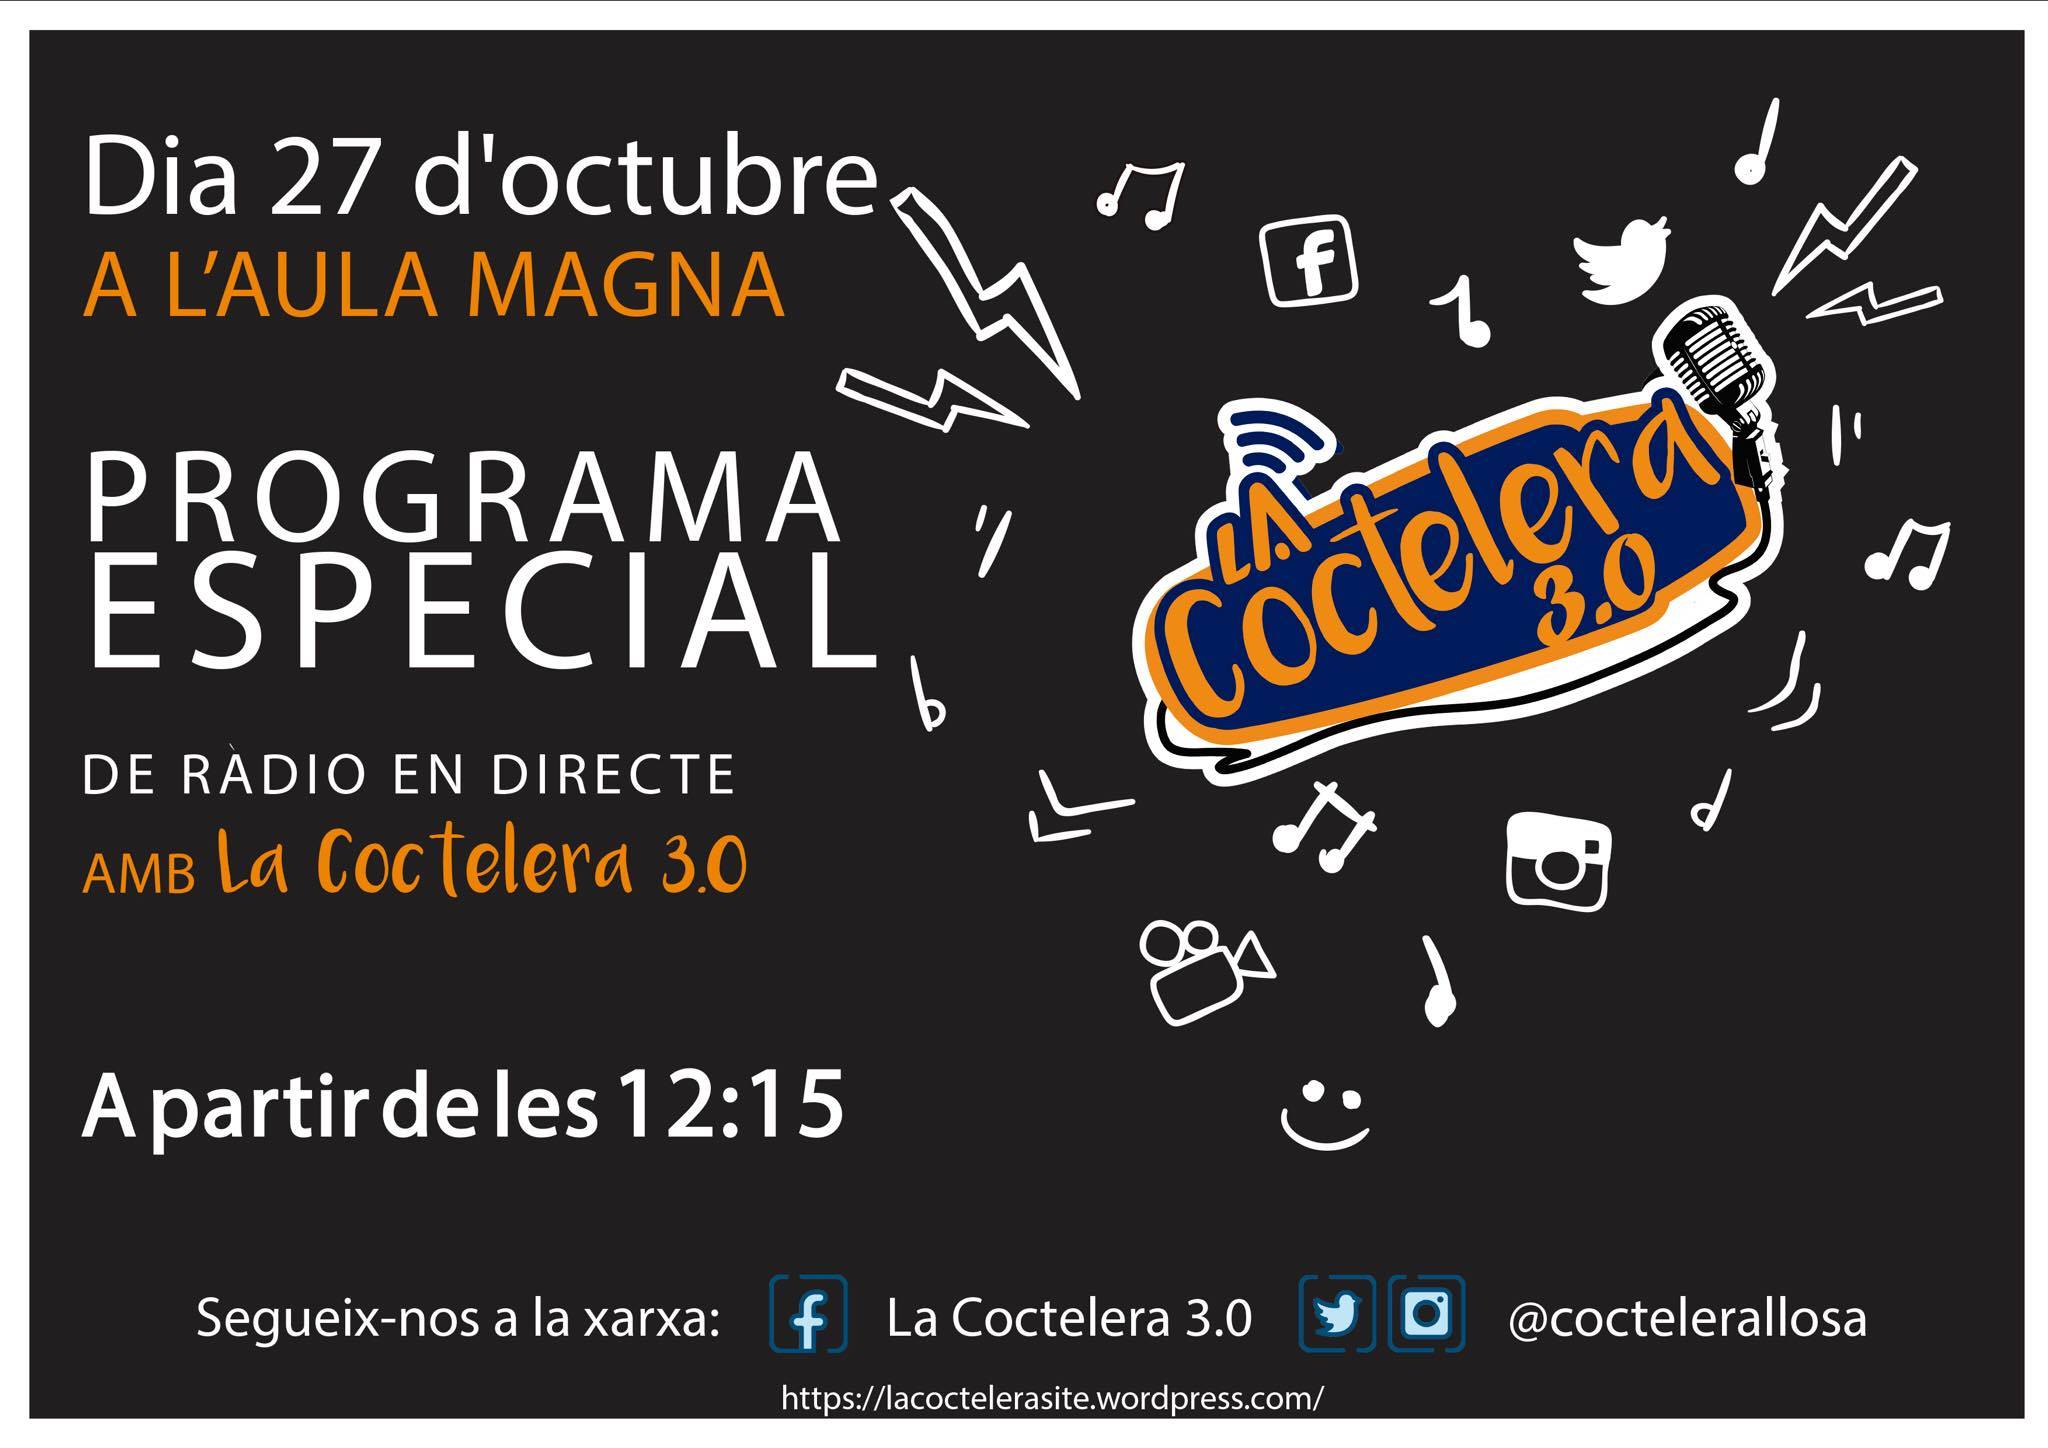 El programa de ràdio La Coctelera 3.0, en directe des del Campus de Gandia